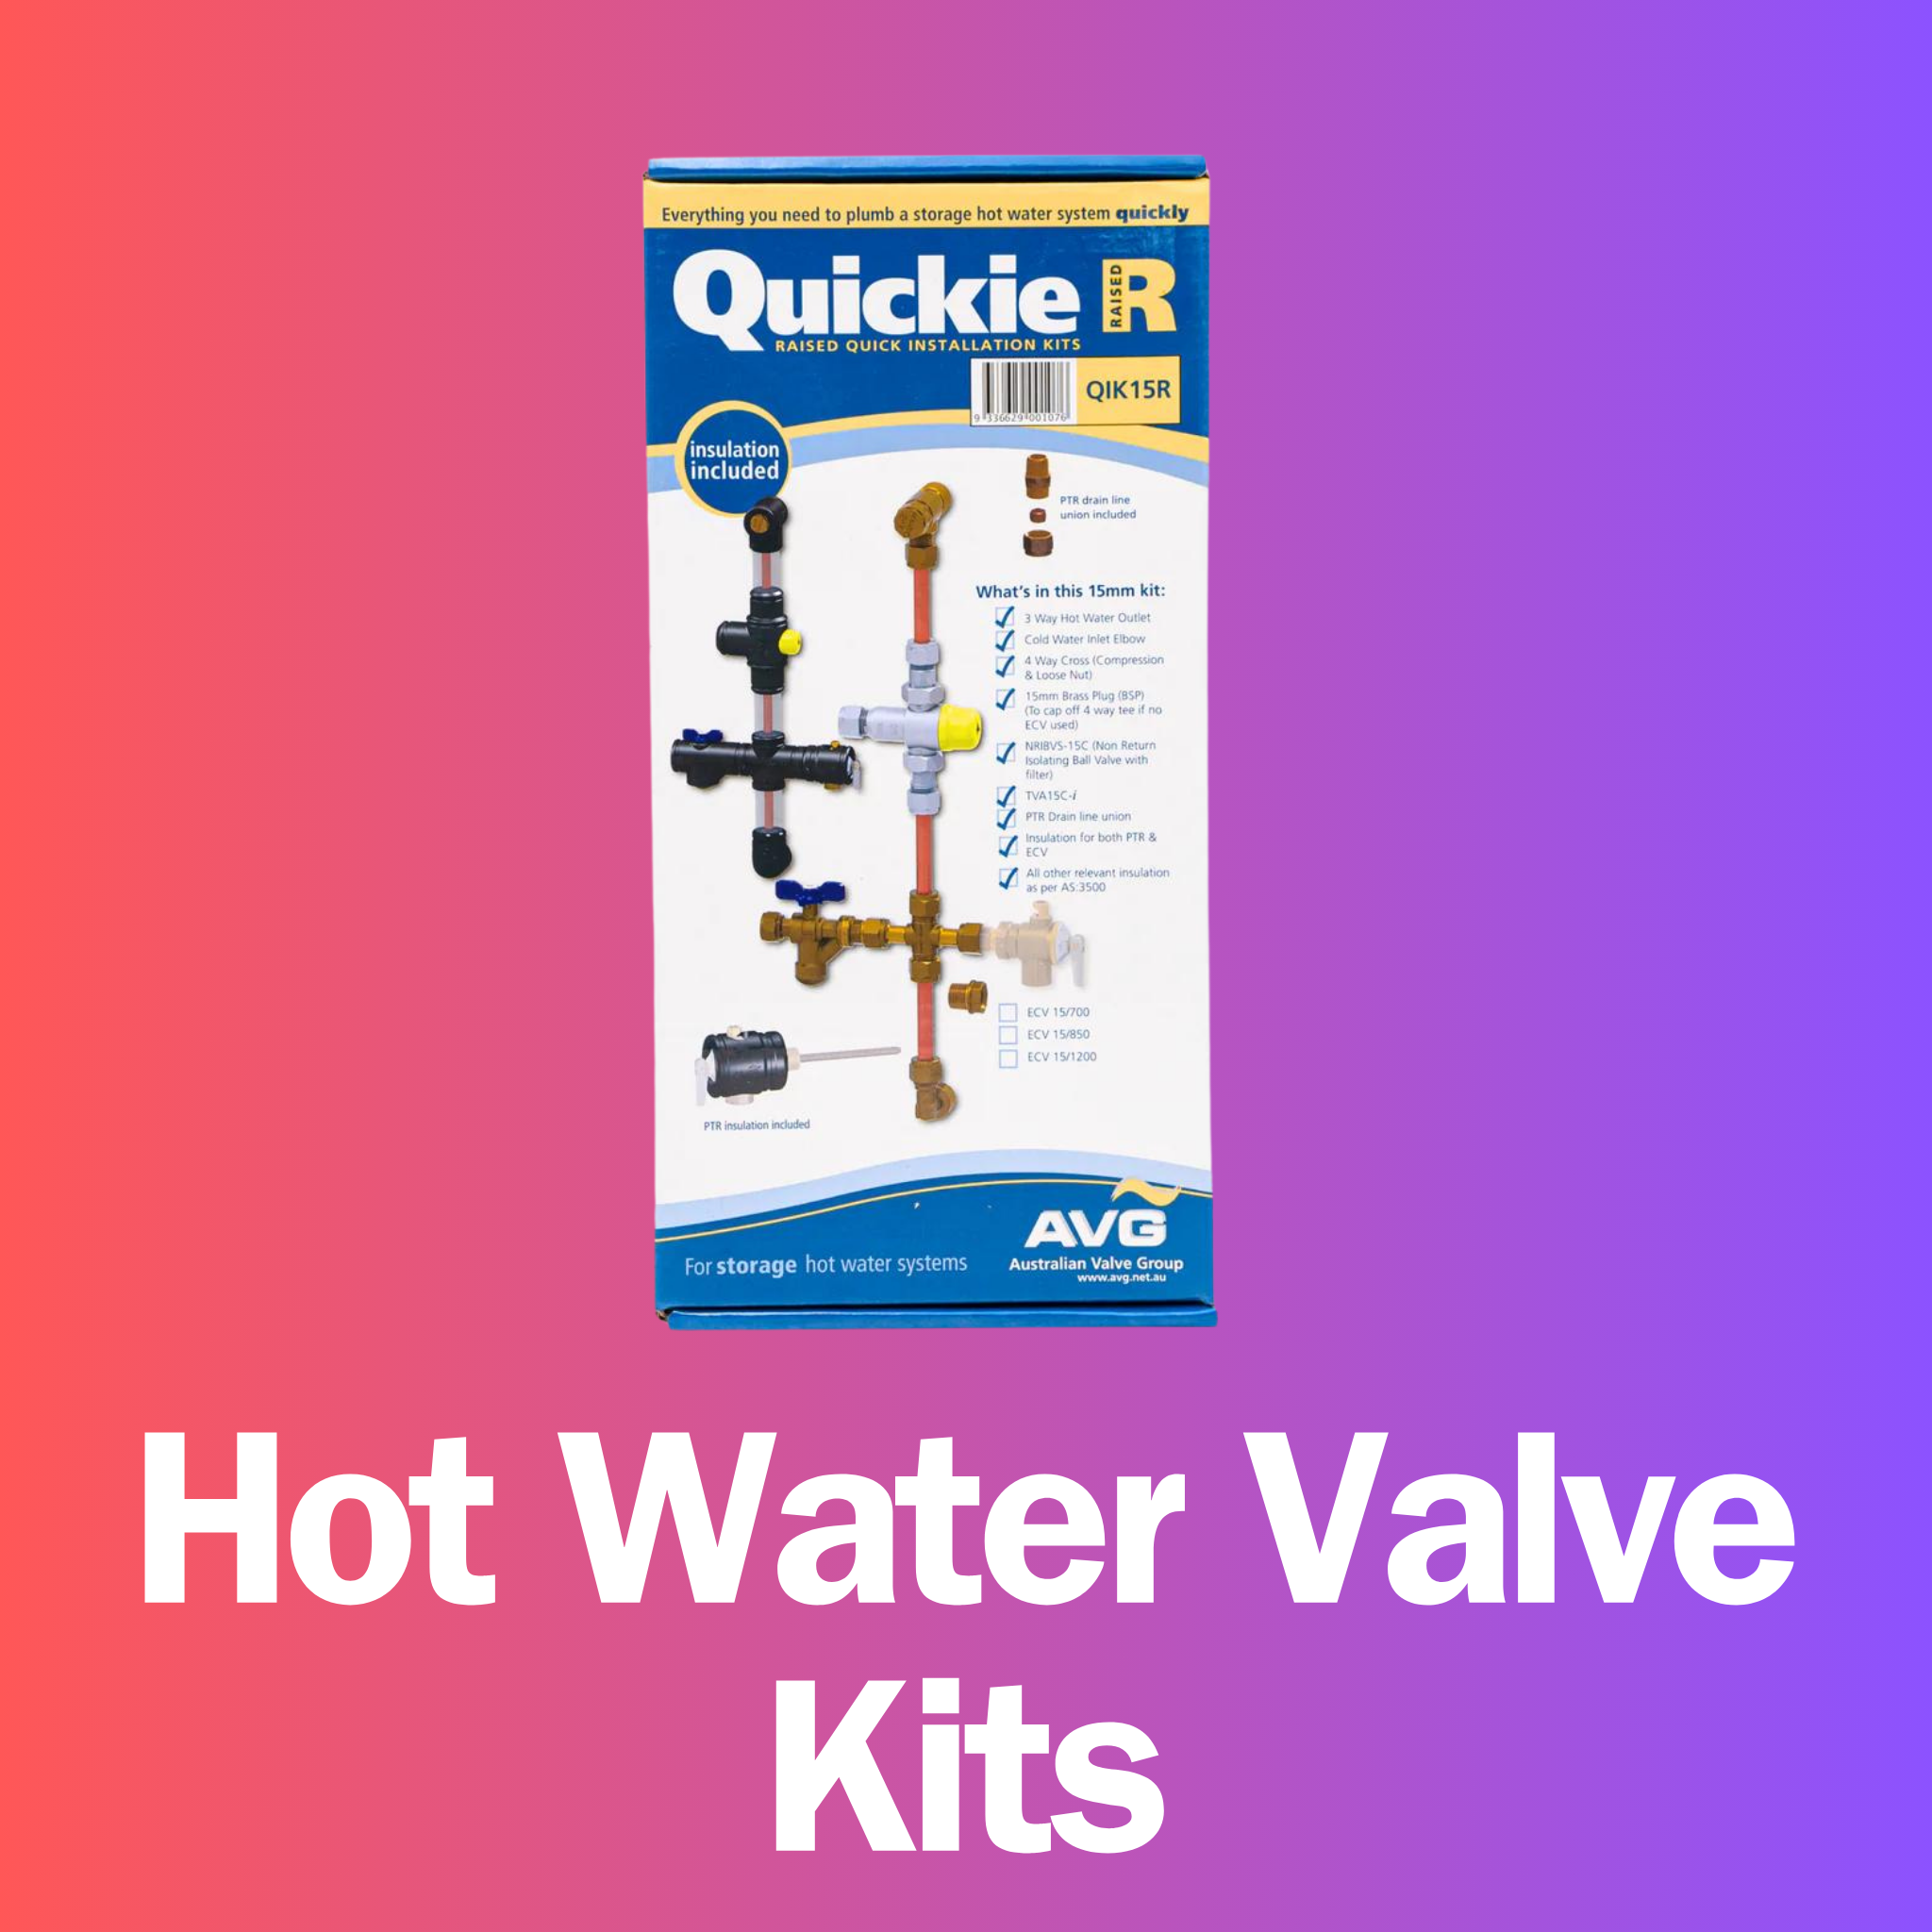 Hot Water Valve Kits